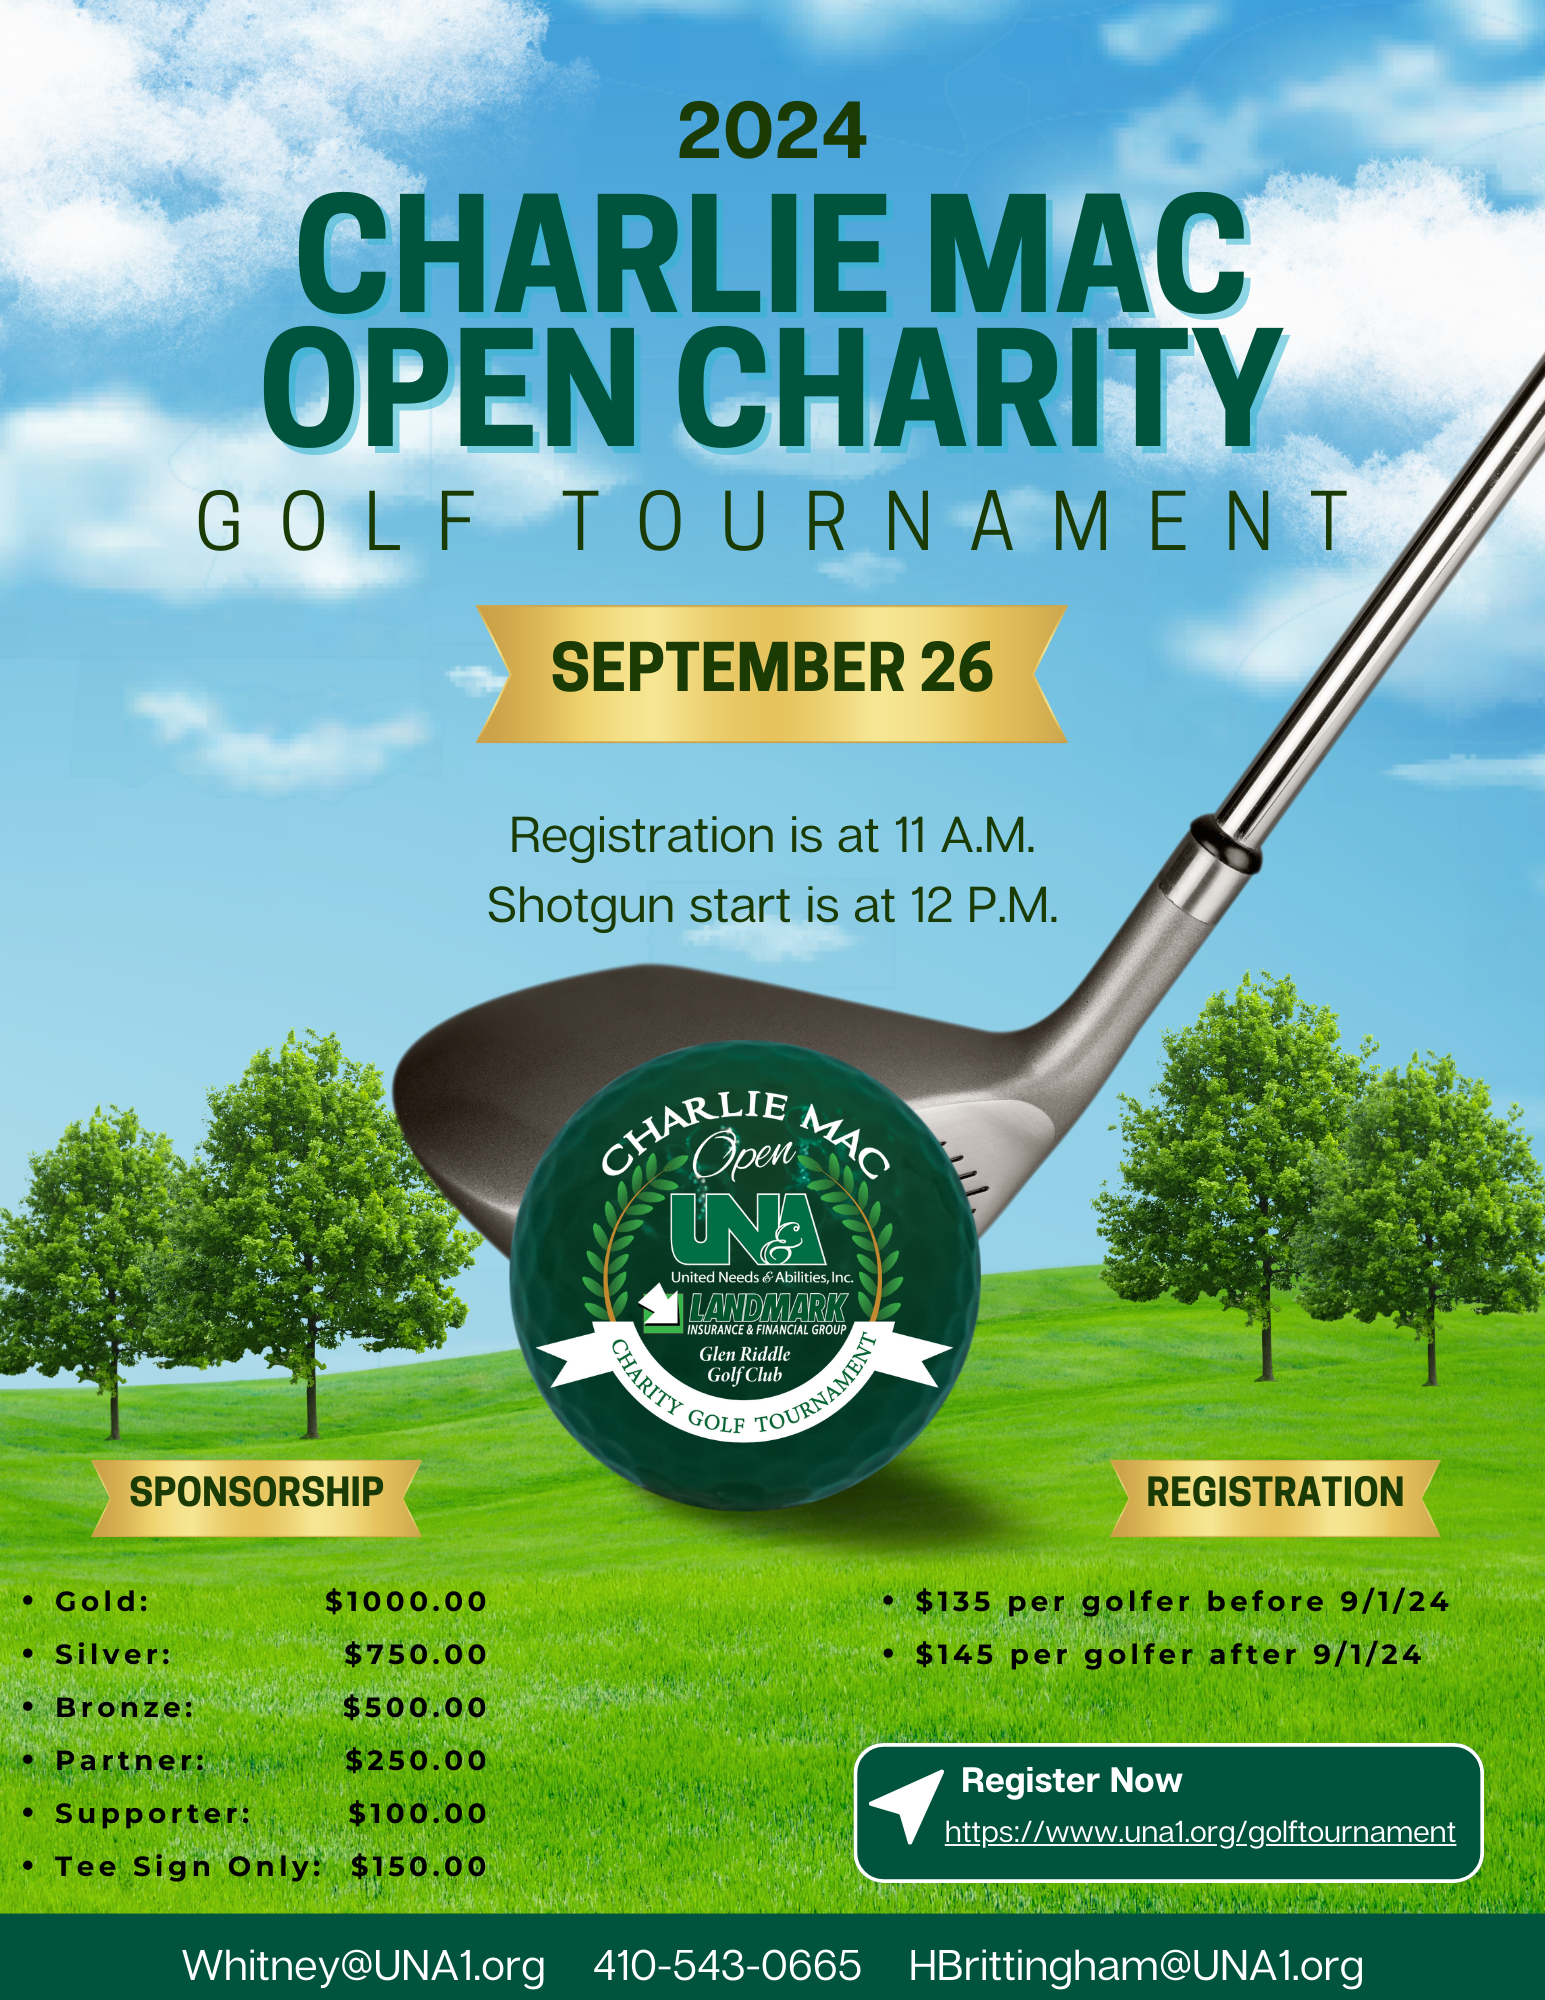 Charlie Mac Open Charity Golf Tournament 2024 Flyer